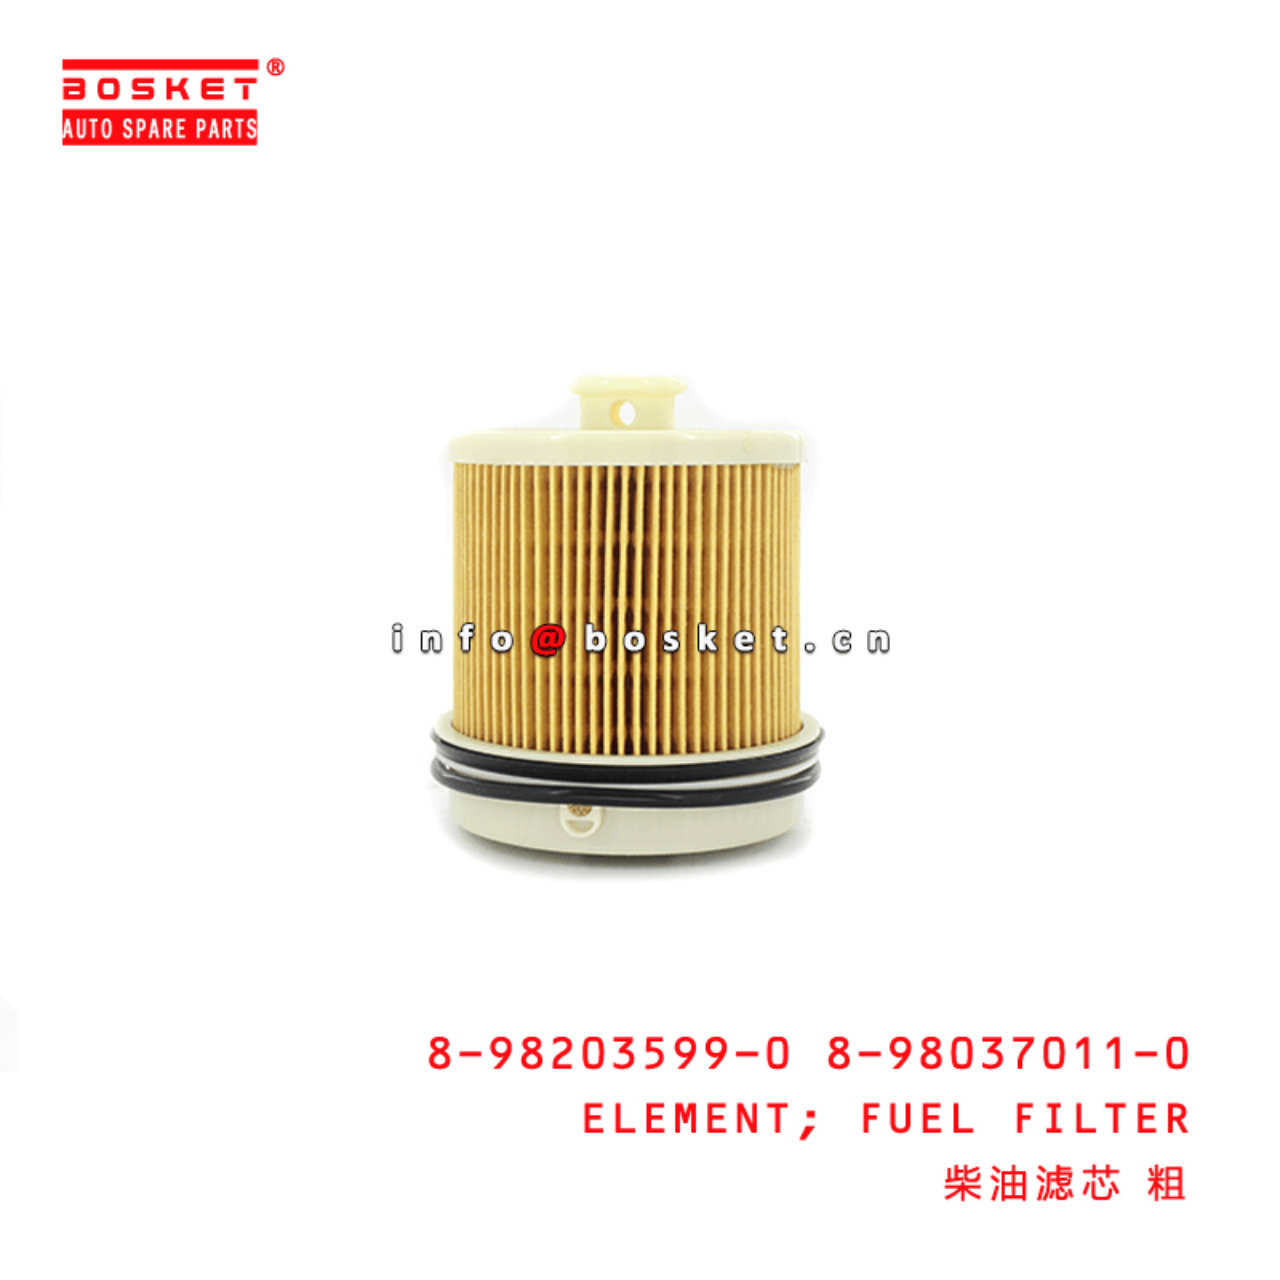 8-98203599-0 8-98037011-0 Fuel Filter Element 8982035990 8980370110 Suitable for ISUZU FRR FSR FTR 4